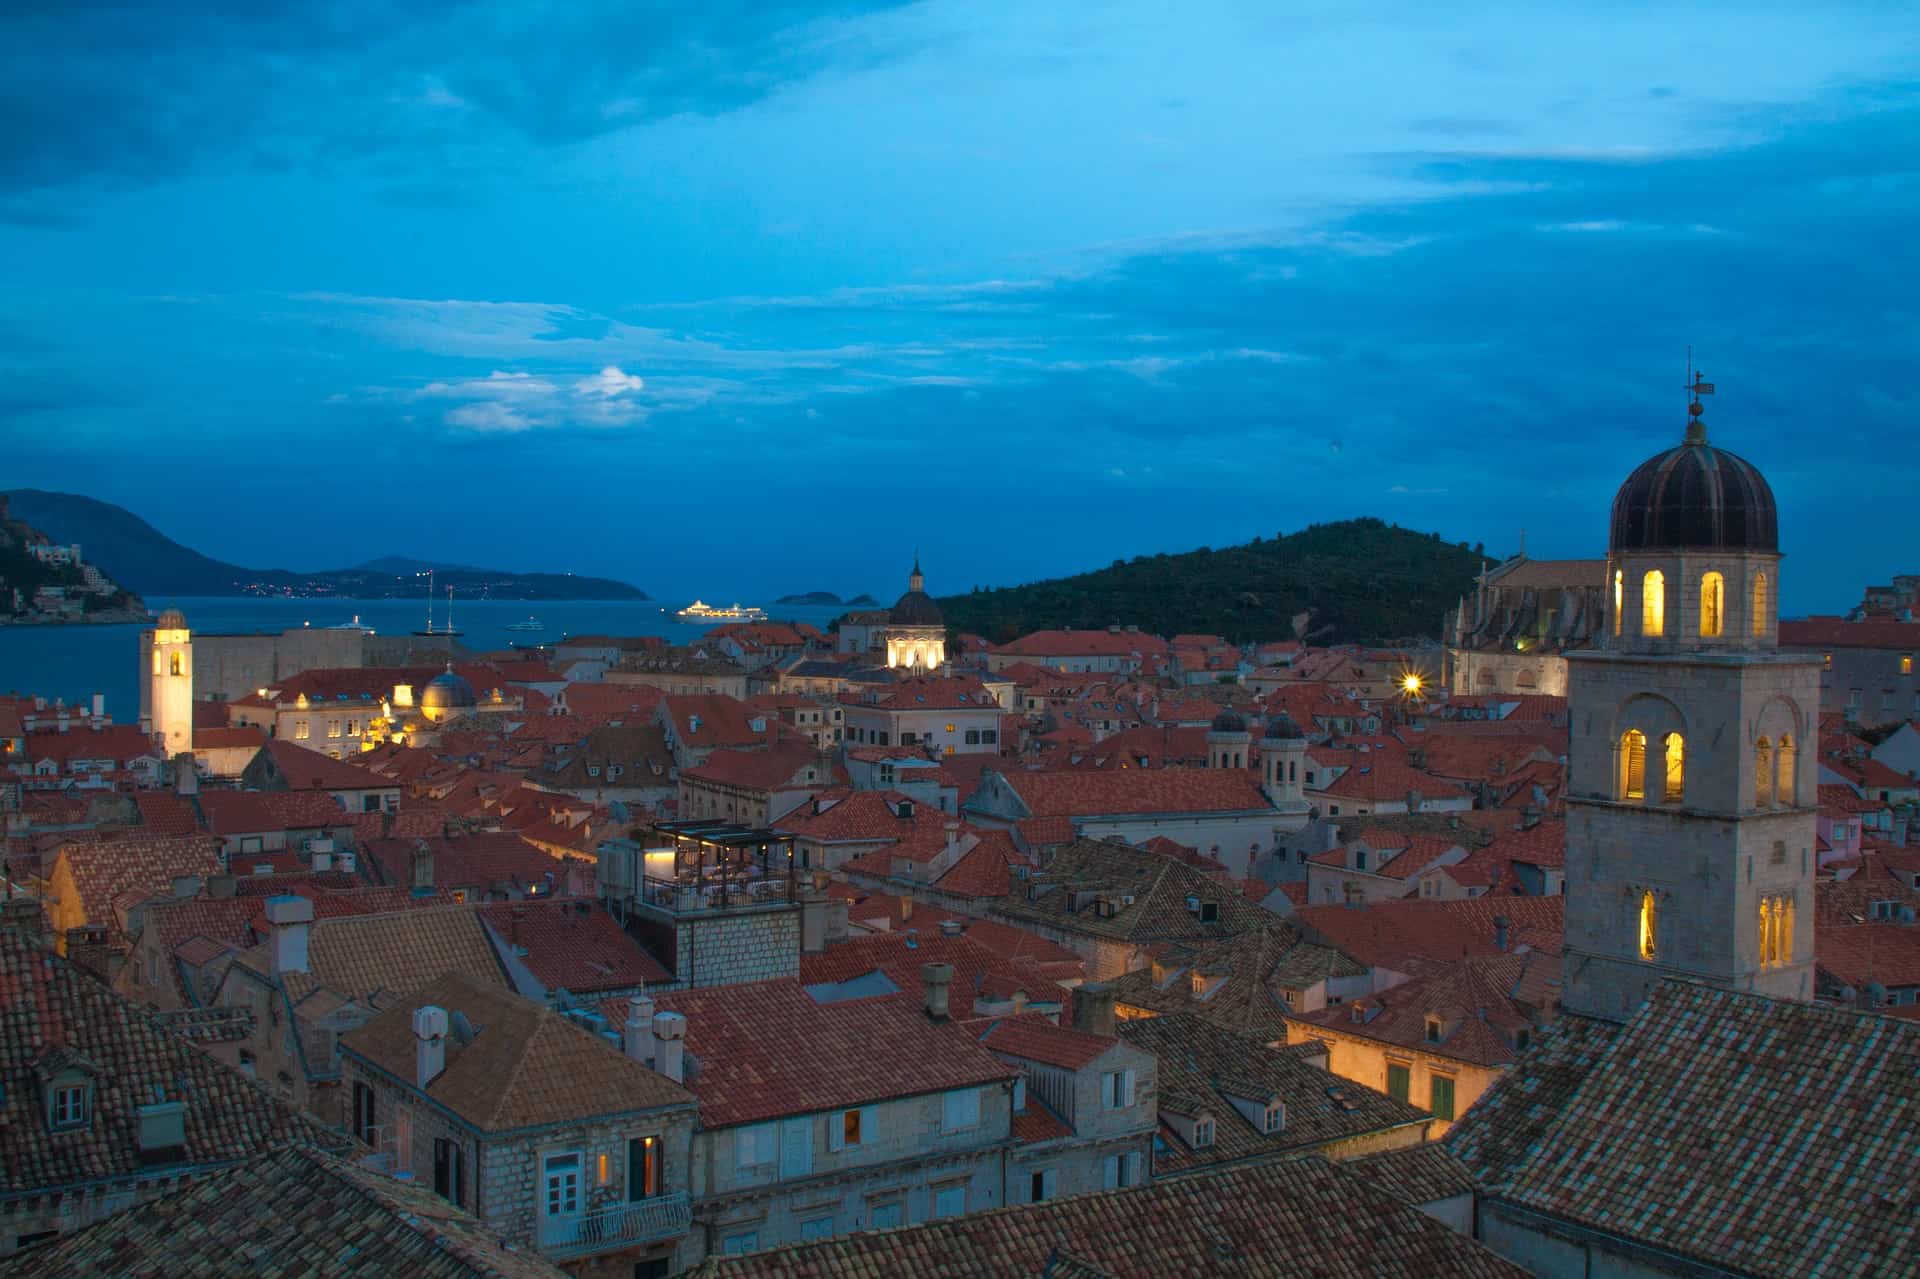 Day 3: Dubrovnik